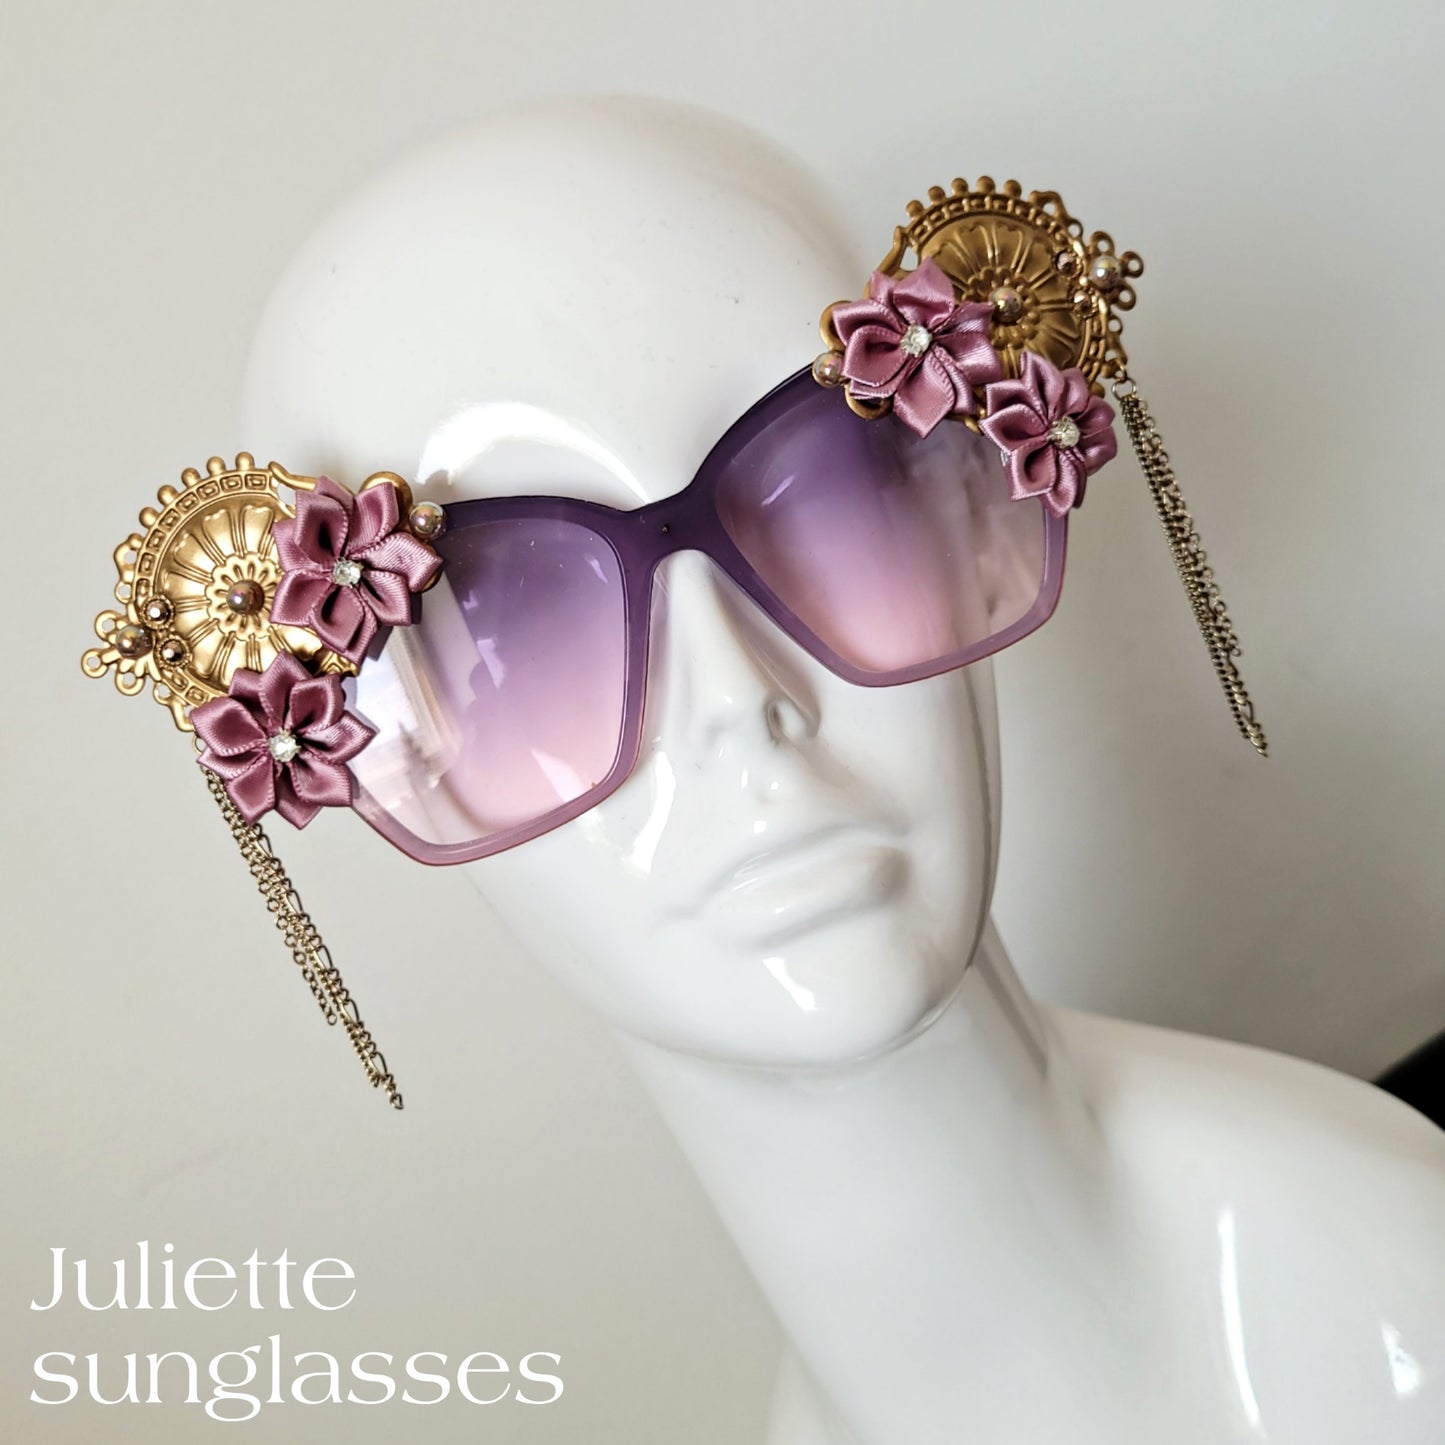 Á vallians coeurs riens impossible Collection: The Juliette sunglasses